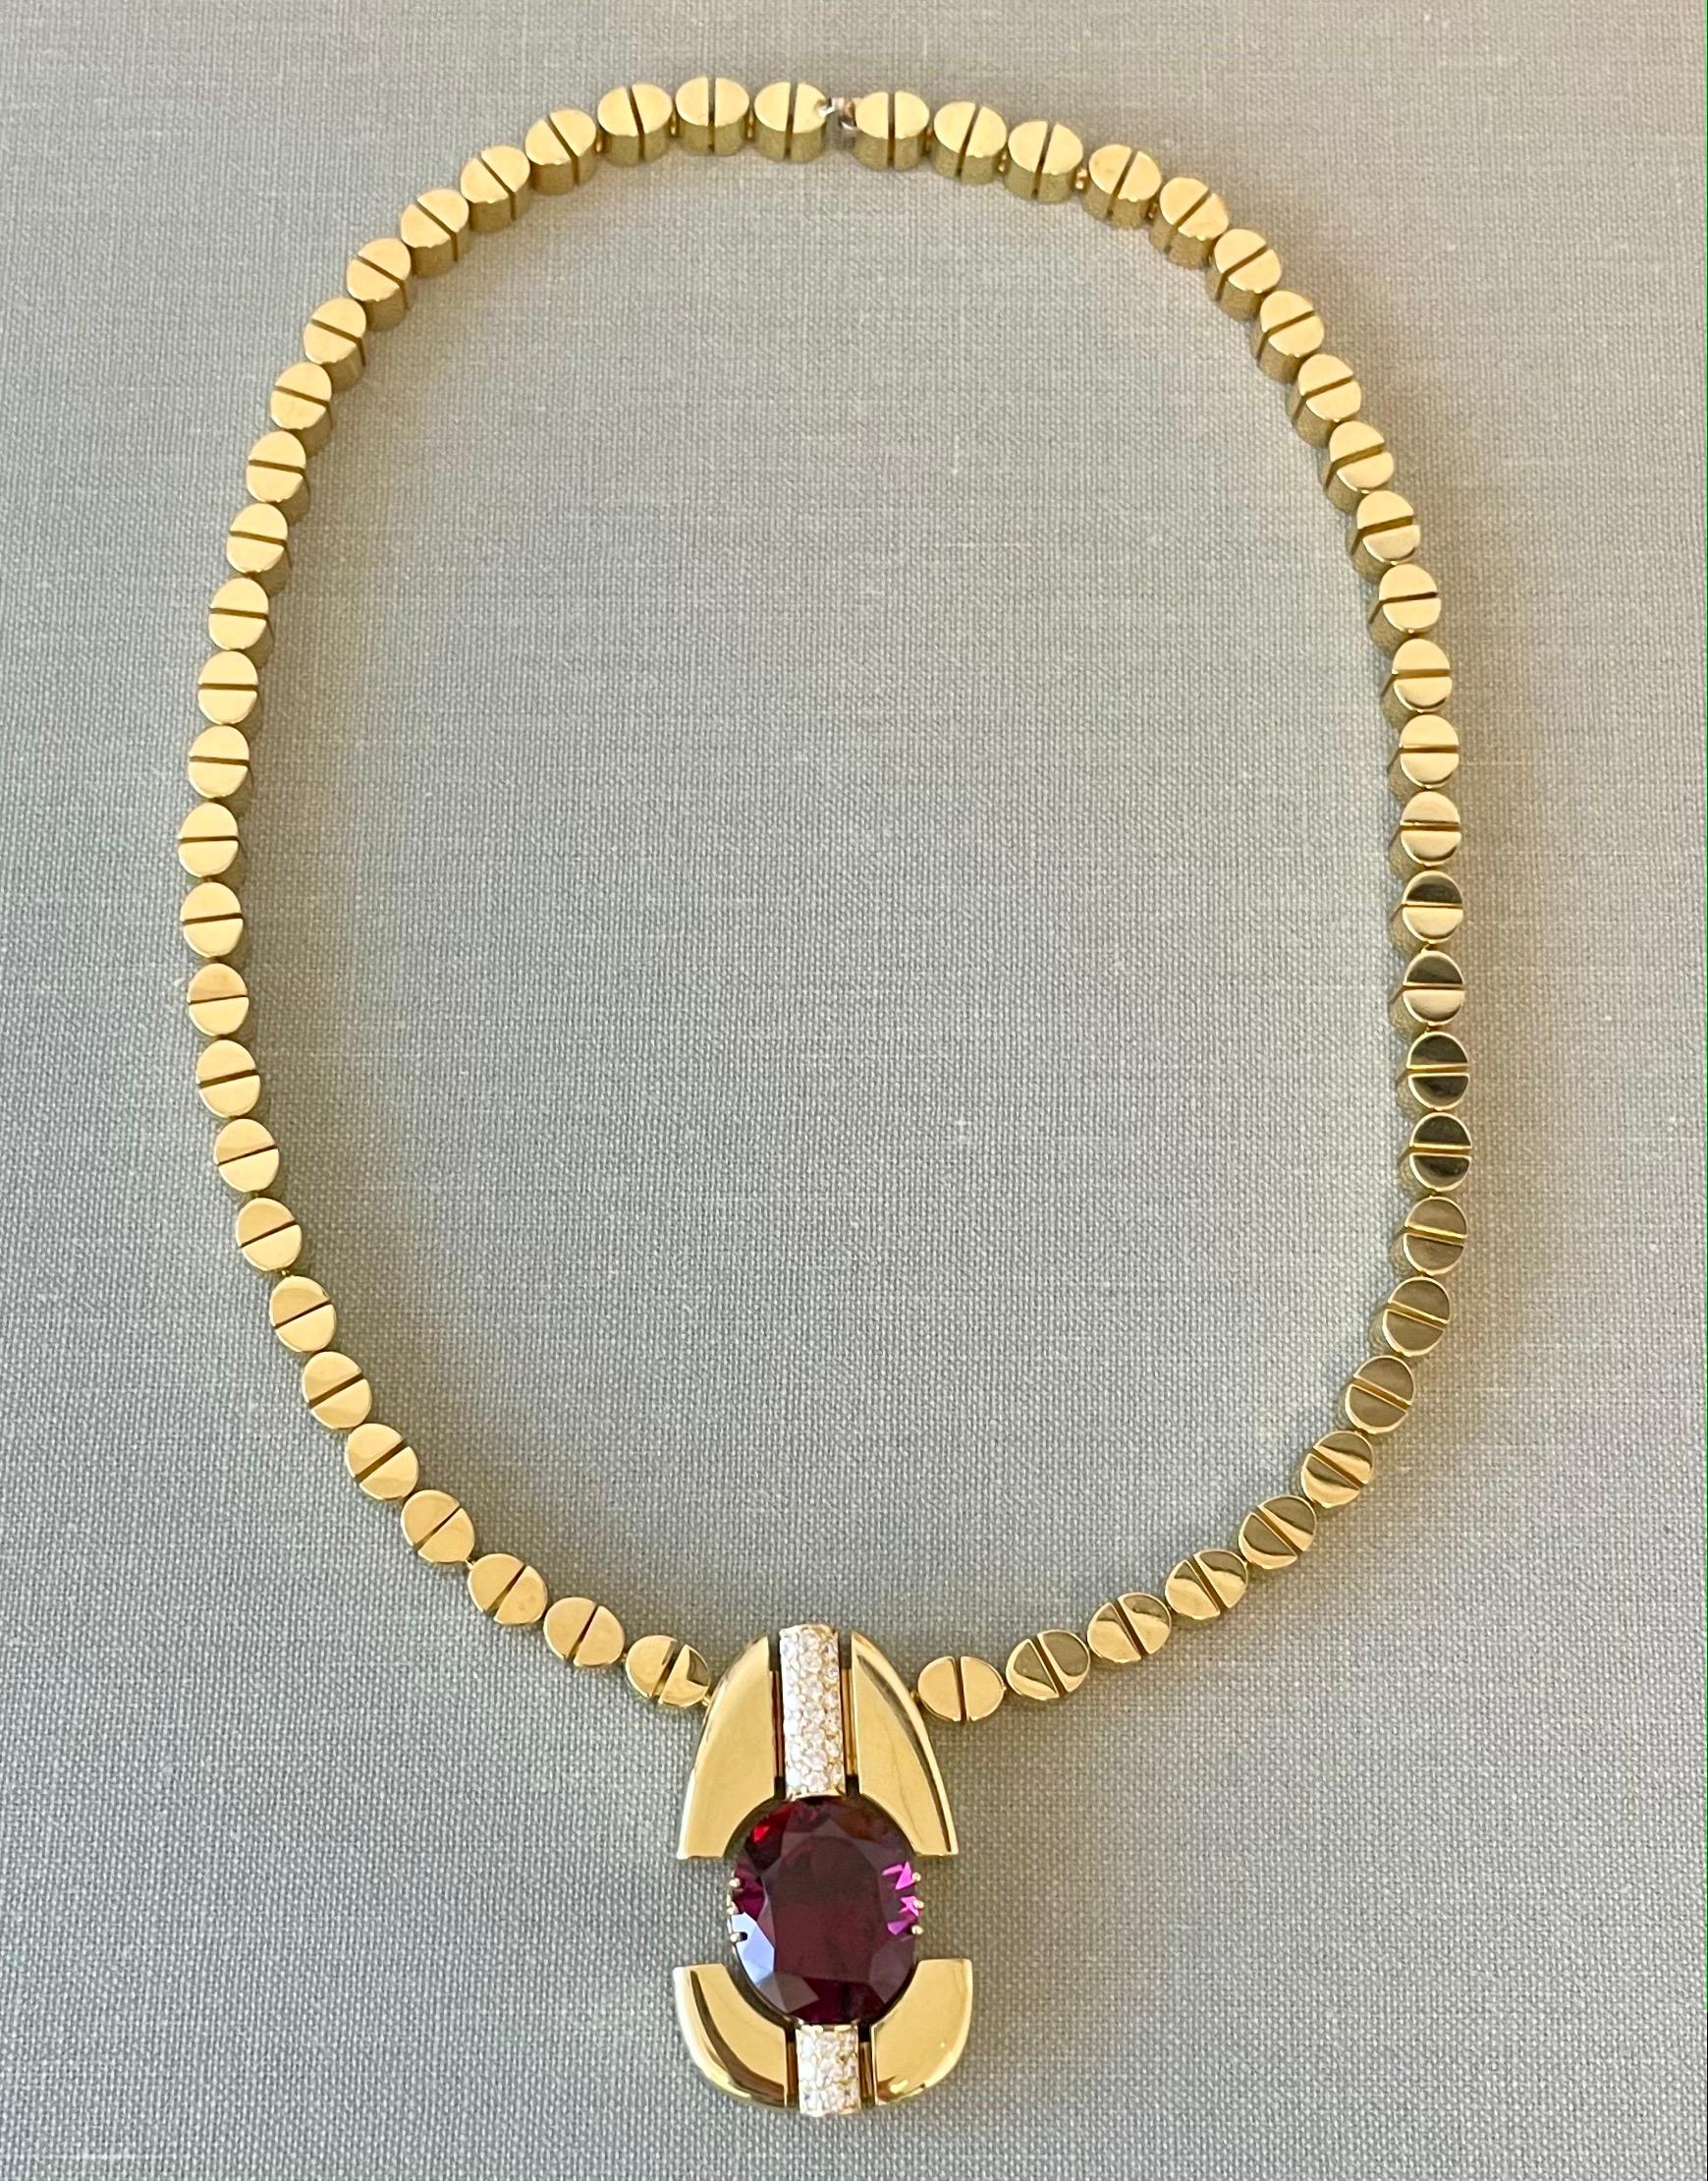 David Zoltan 18 Karat Yellow Gold Oval Rhodolite Garnet and Diamond Necklace For Sale 3